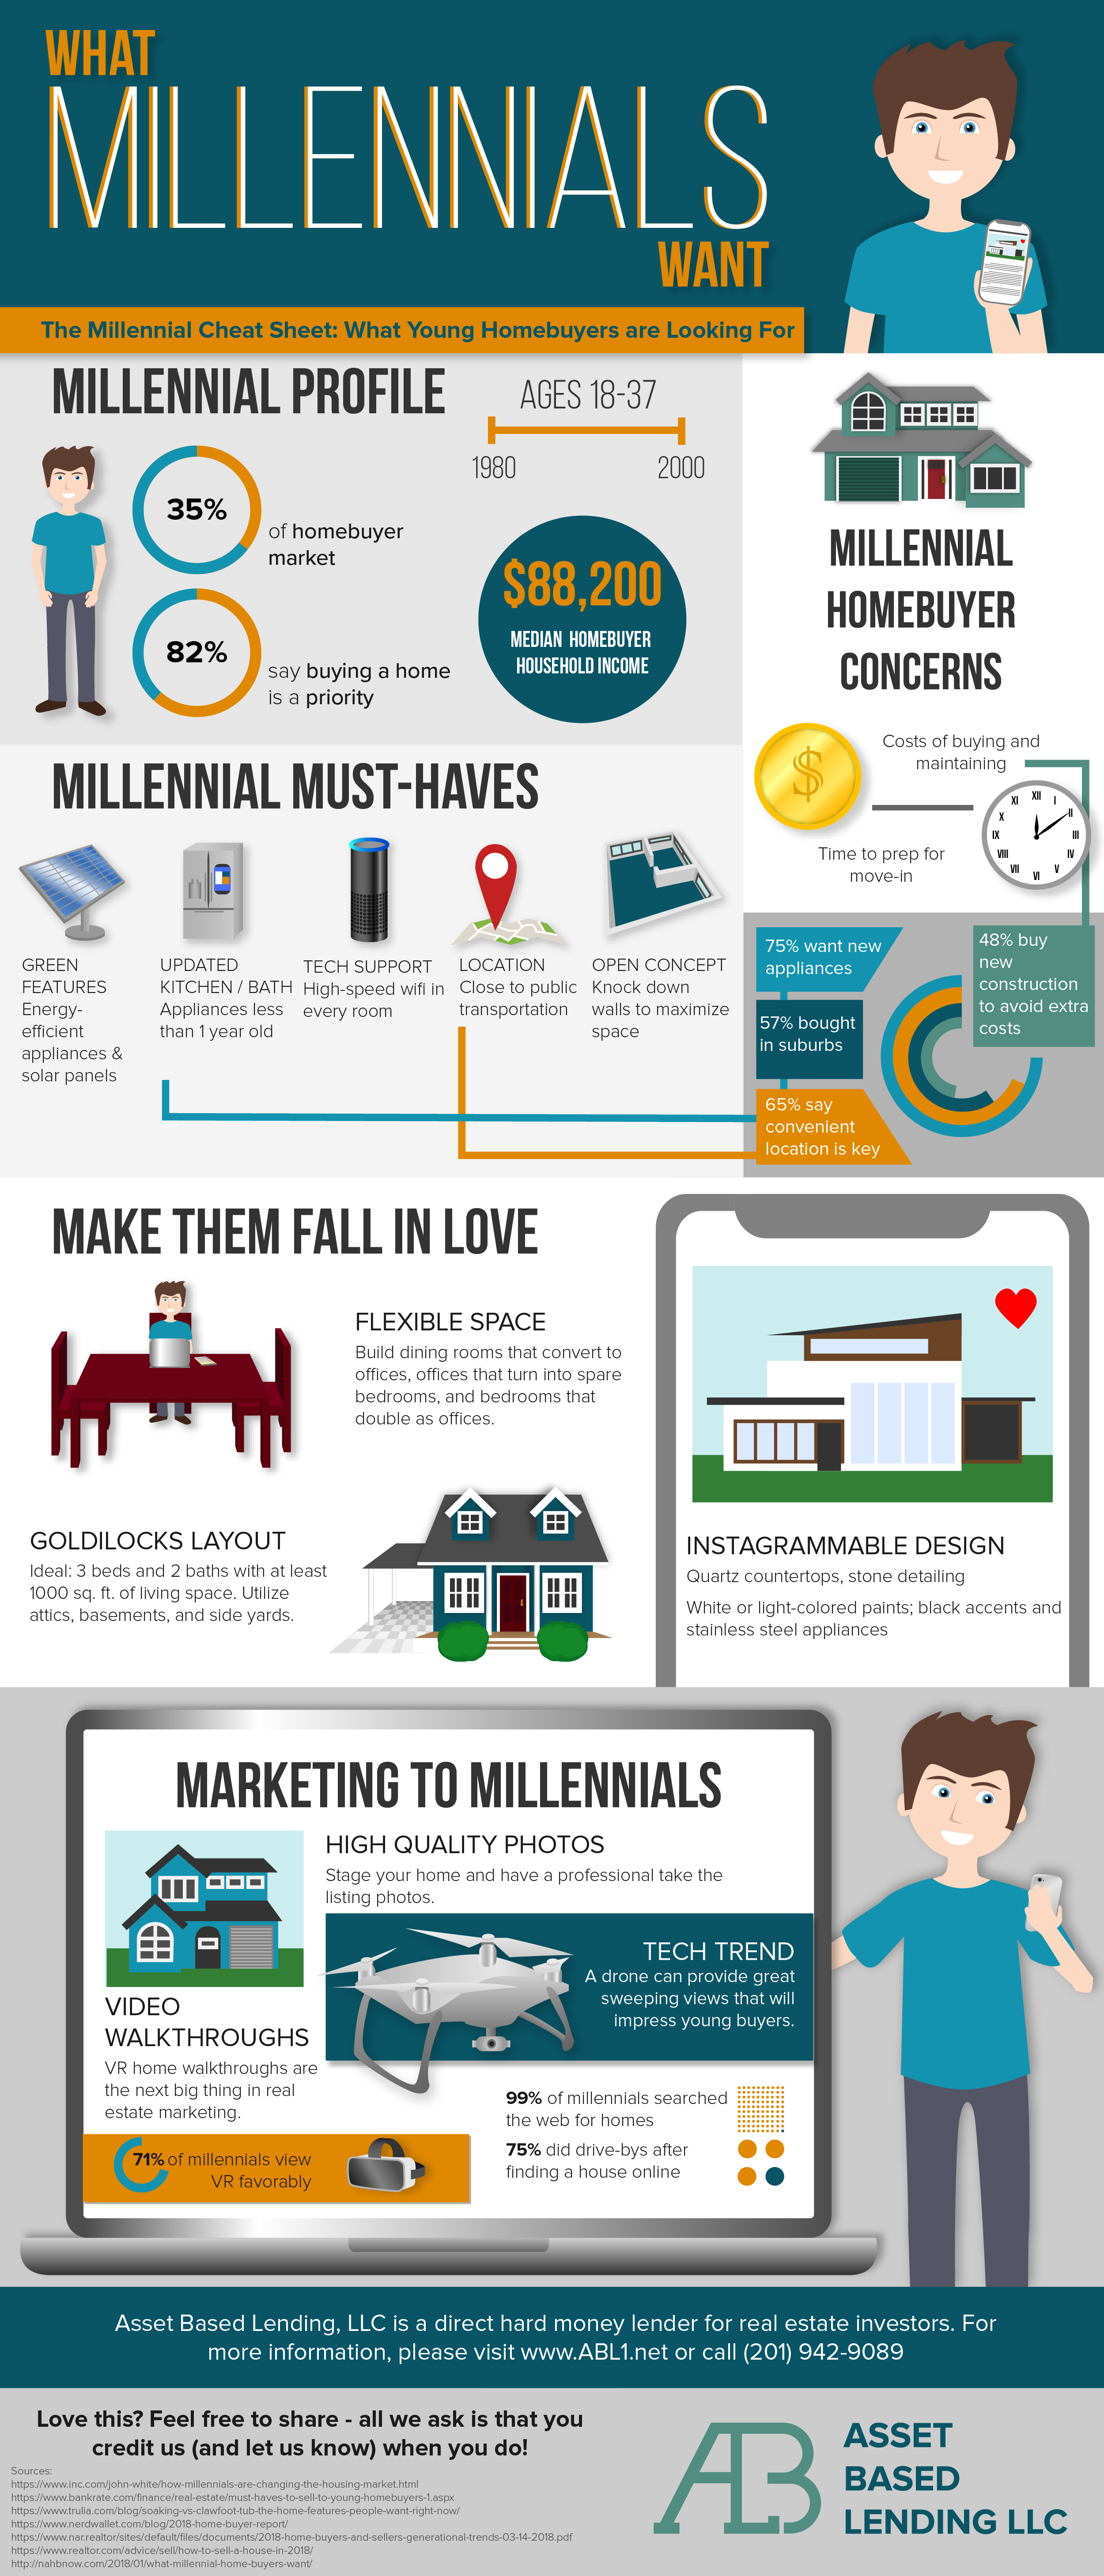 Real Estate Marketing For Millennials